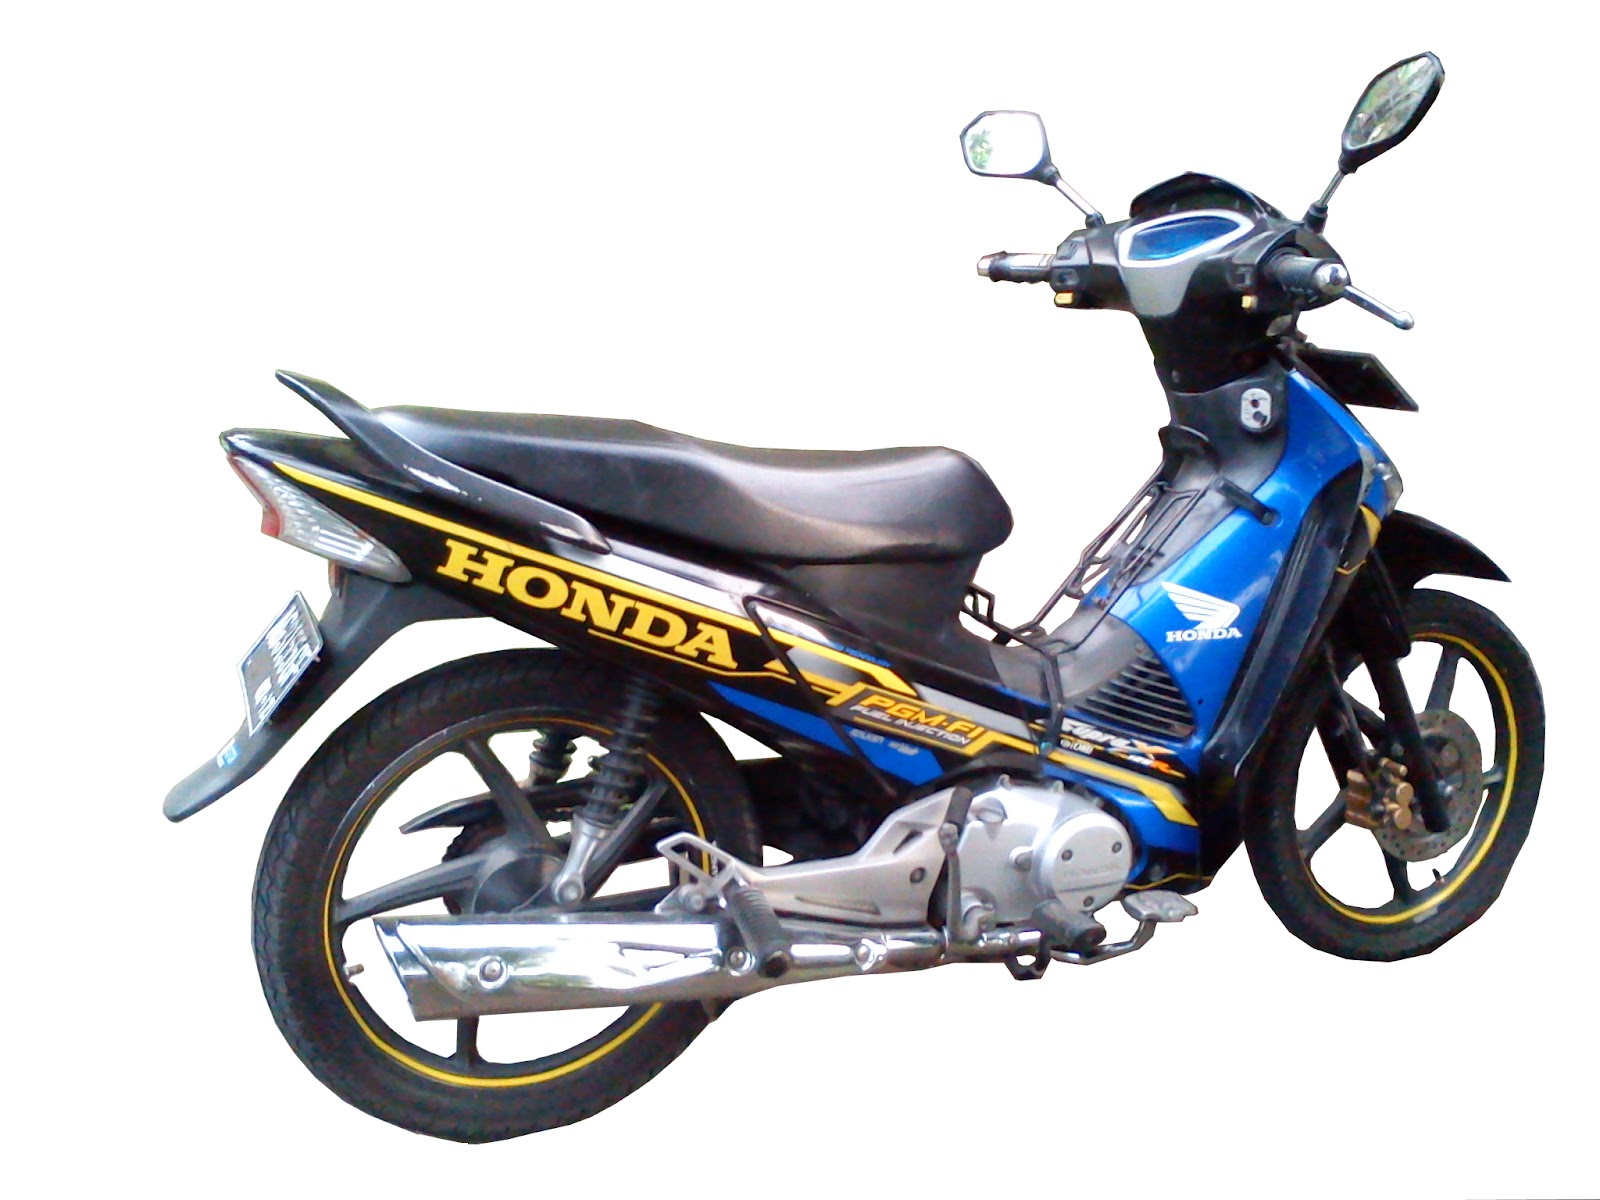 Honda pgm. Honda PGM f1. PGM-Fi Honda что это. Хонда PGM f1 мотоцикл. Honda PGM f1 скутер.